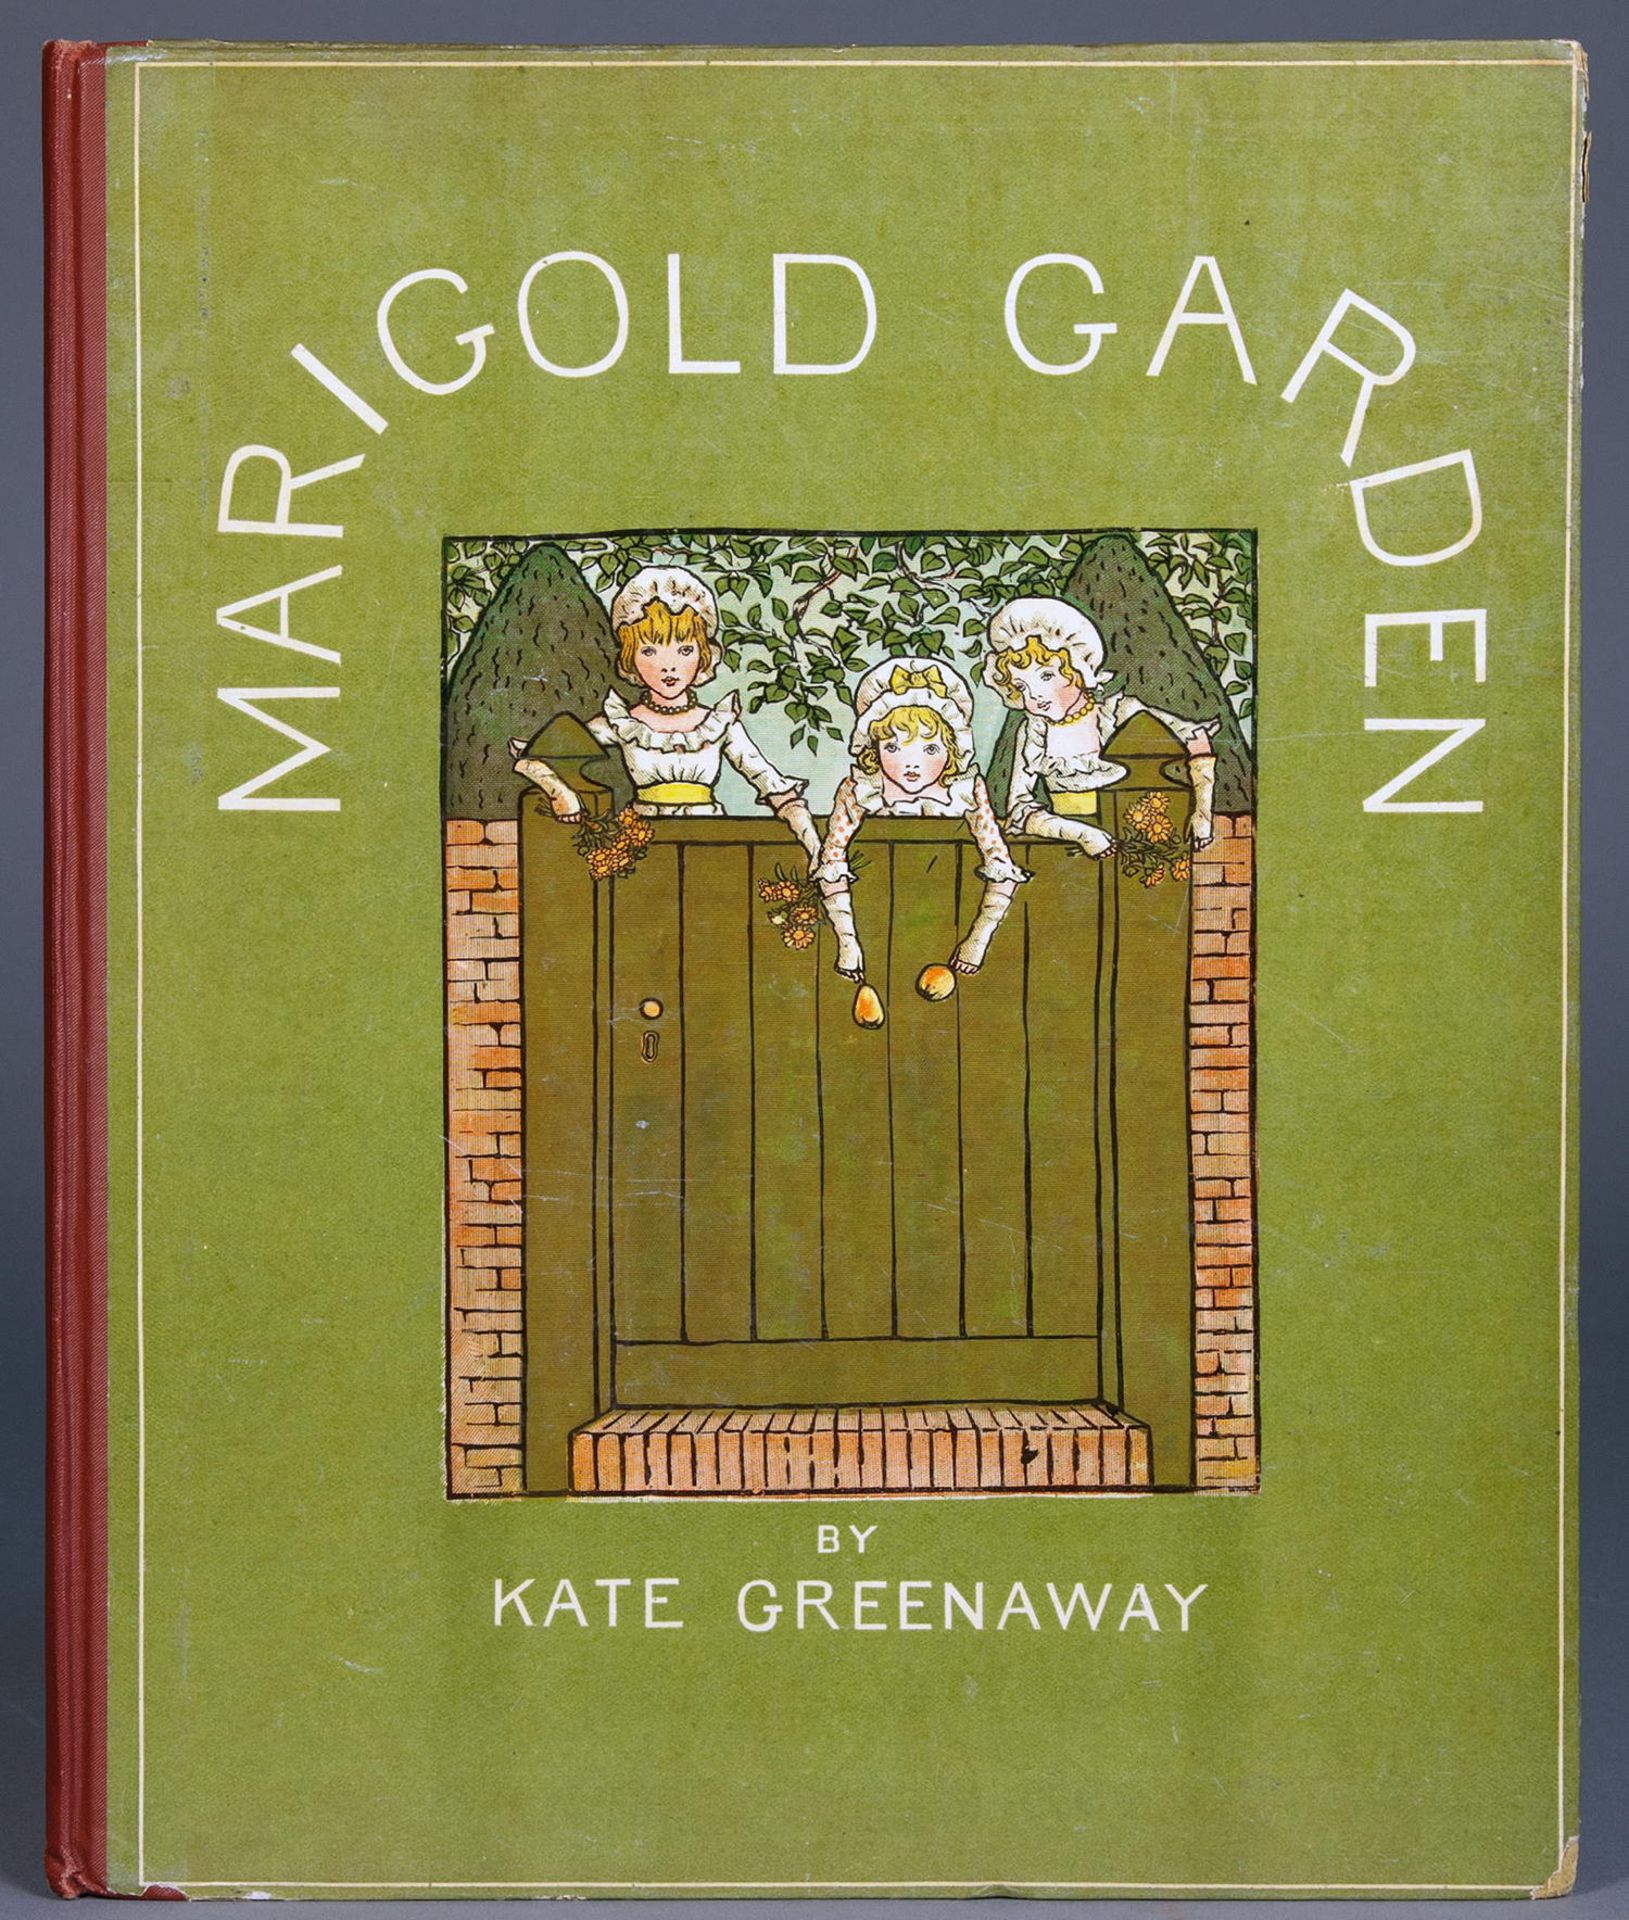 Kate Greenaway - Mother Goose - Image 2 of 4